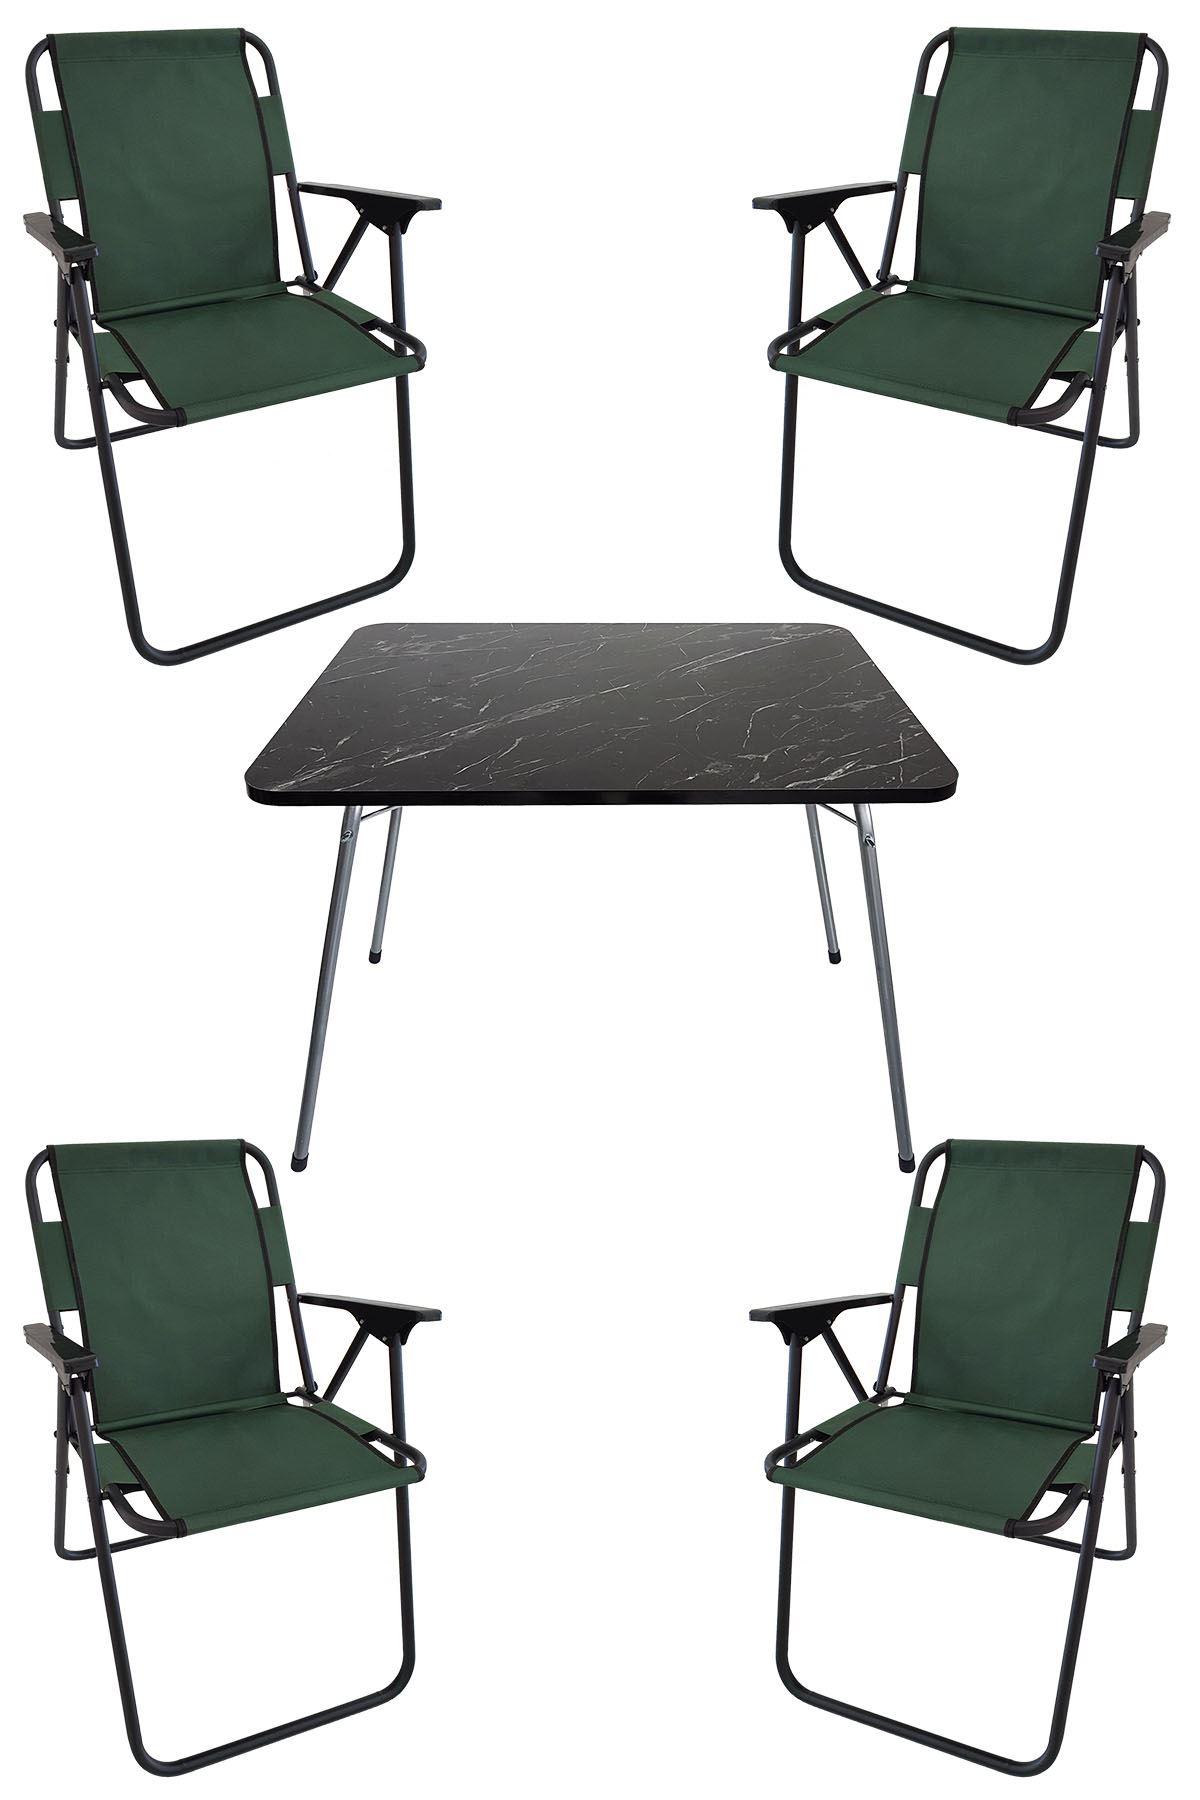 Bofigo 60X80 Granite Patterned Folding Table + 4 Pieces Folding Chair Camping Set Garden Set Green